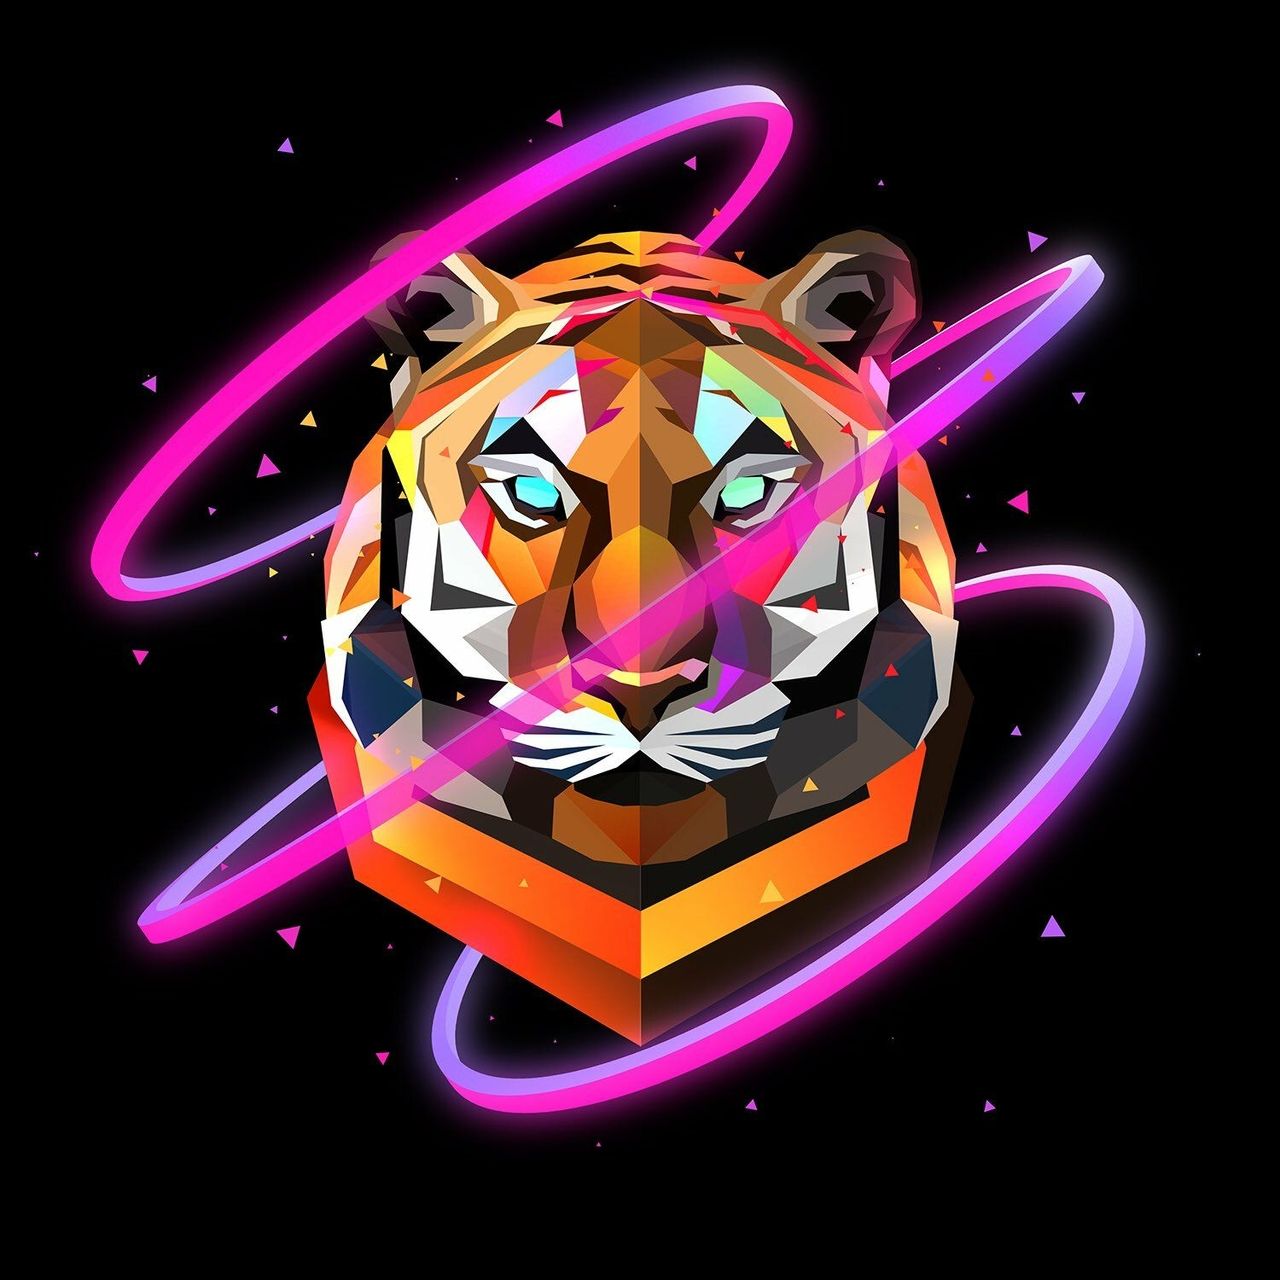 Tiger (x Post From R AmoledBackground)